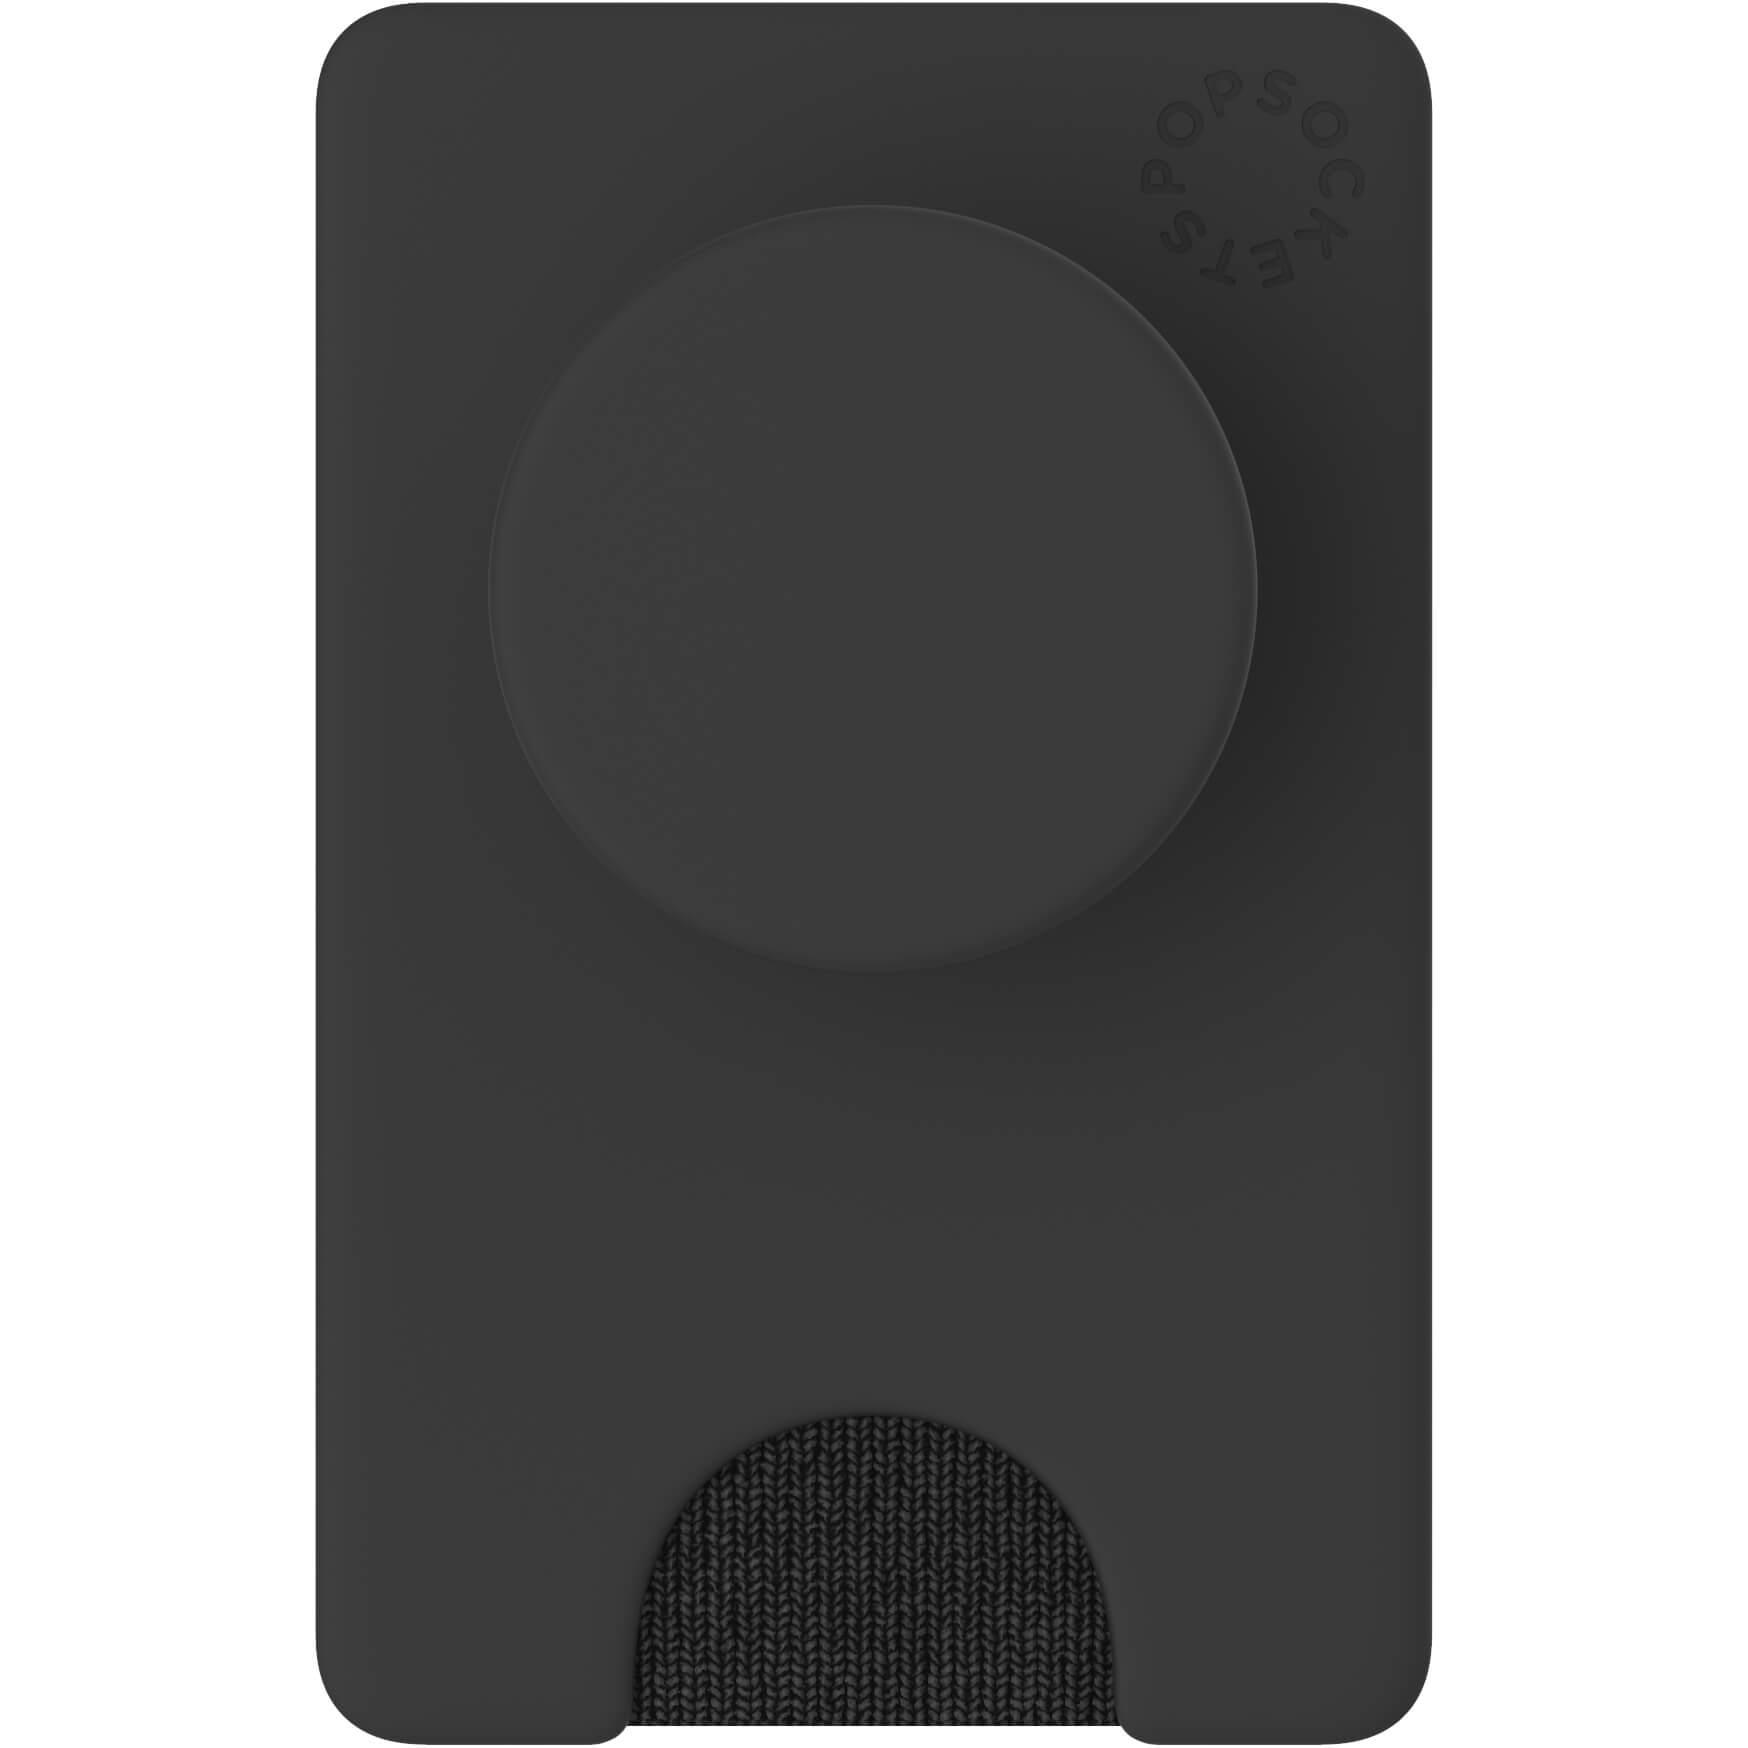 PopWallet+ MagSafe Portafoglio mobile rimovibile, nero